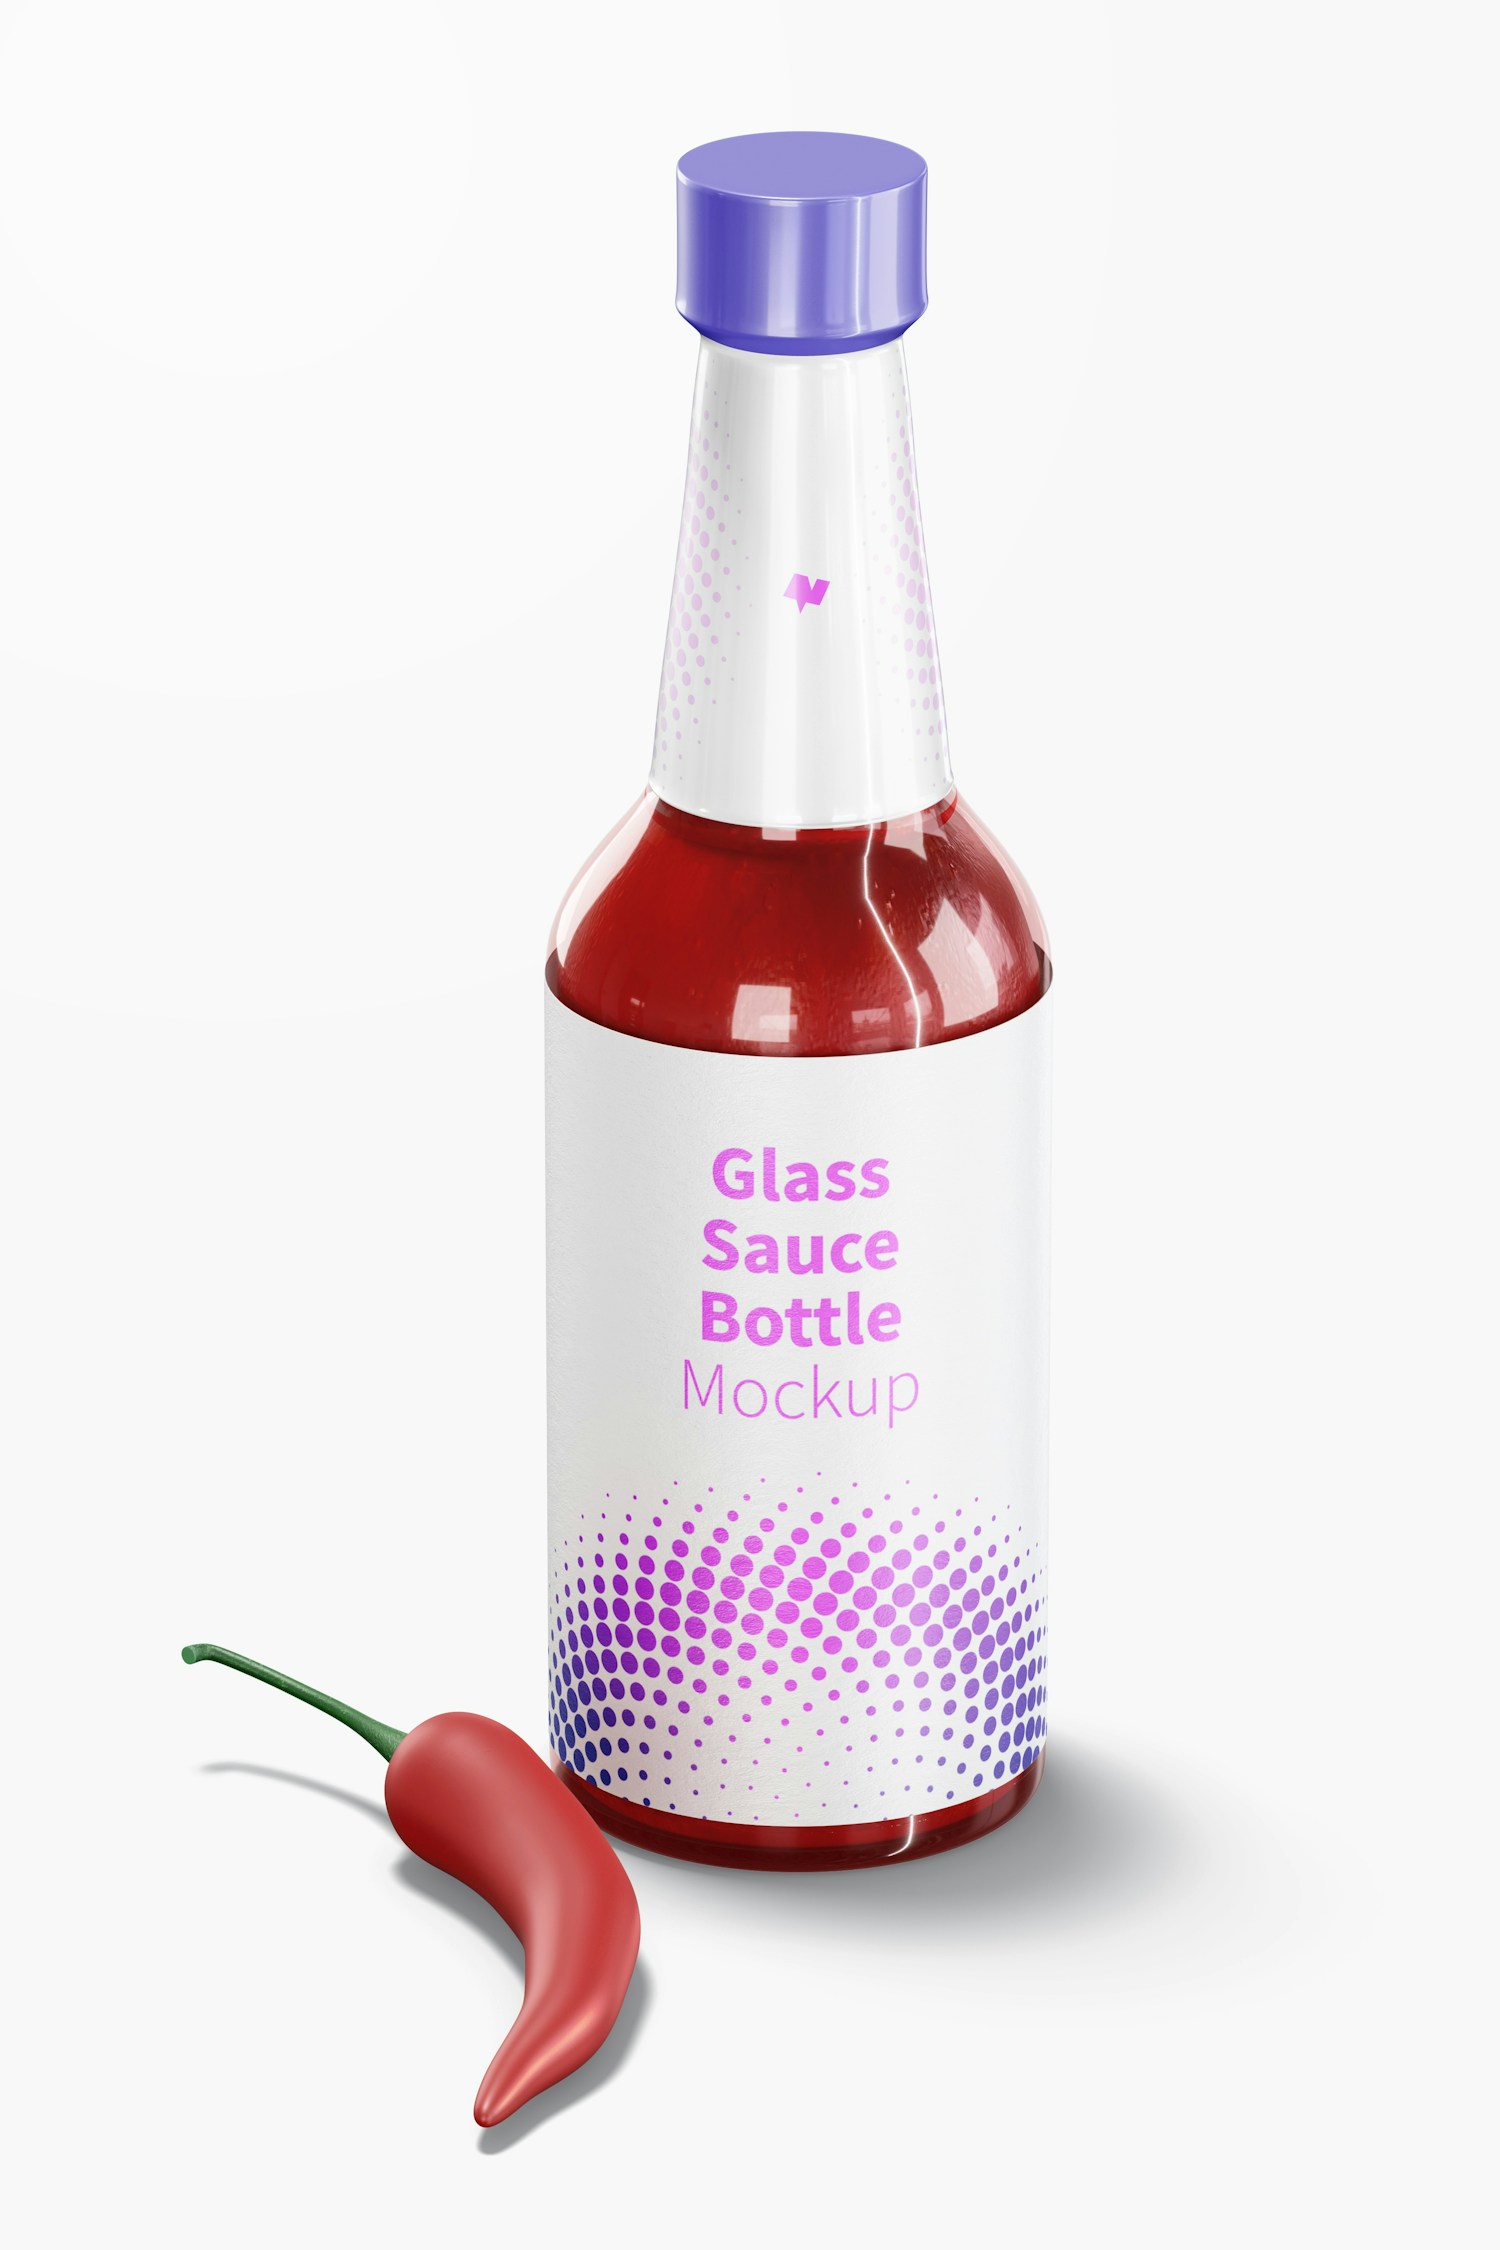 10 oz Glass Sauce Bottle Mockup